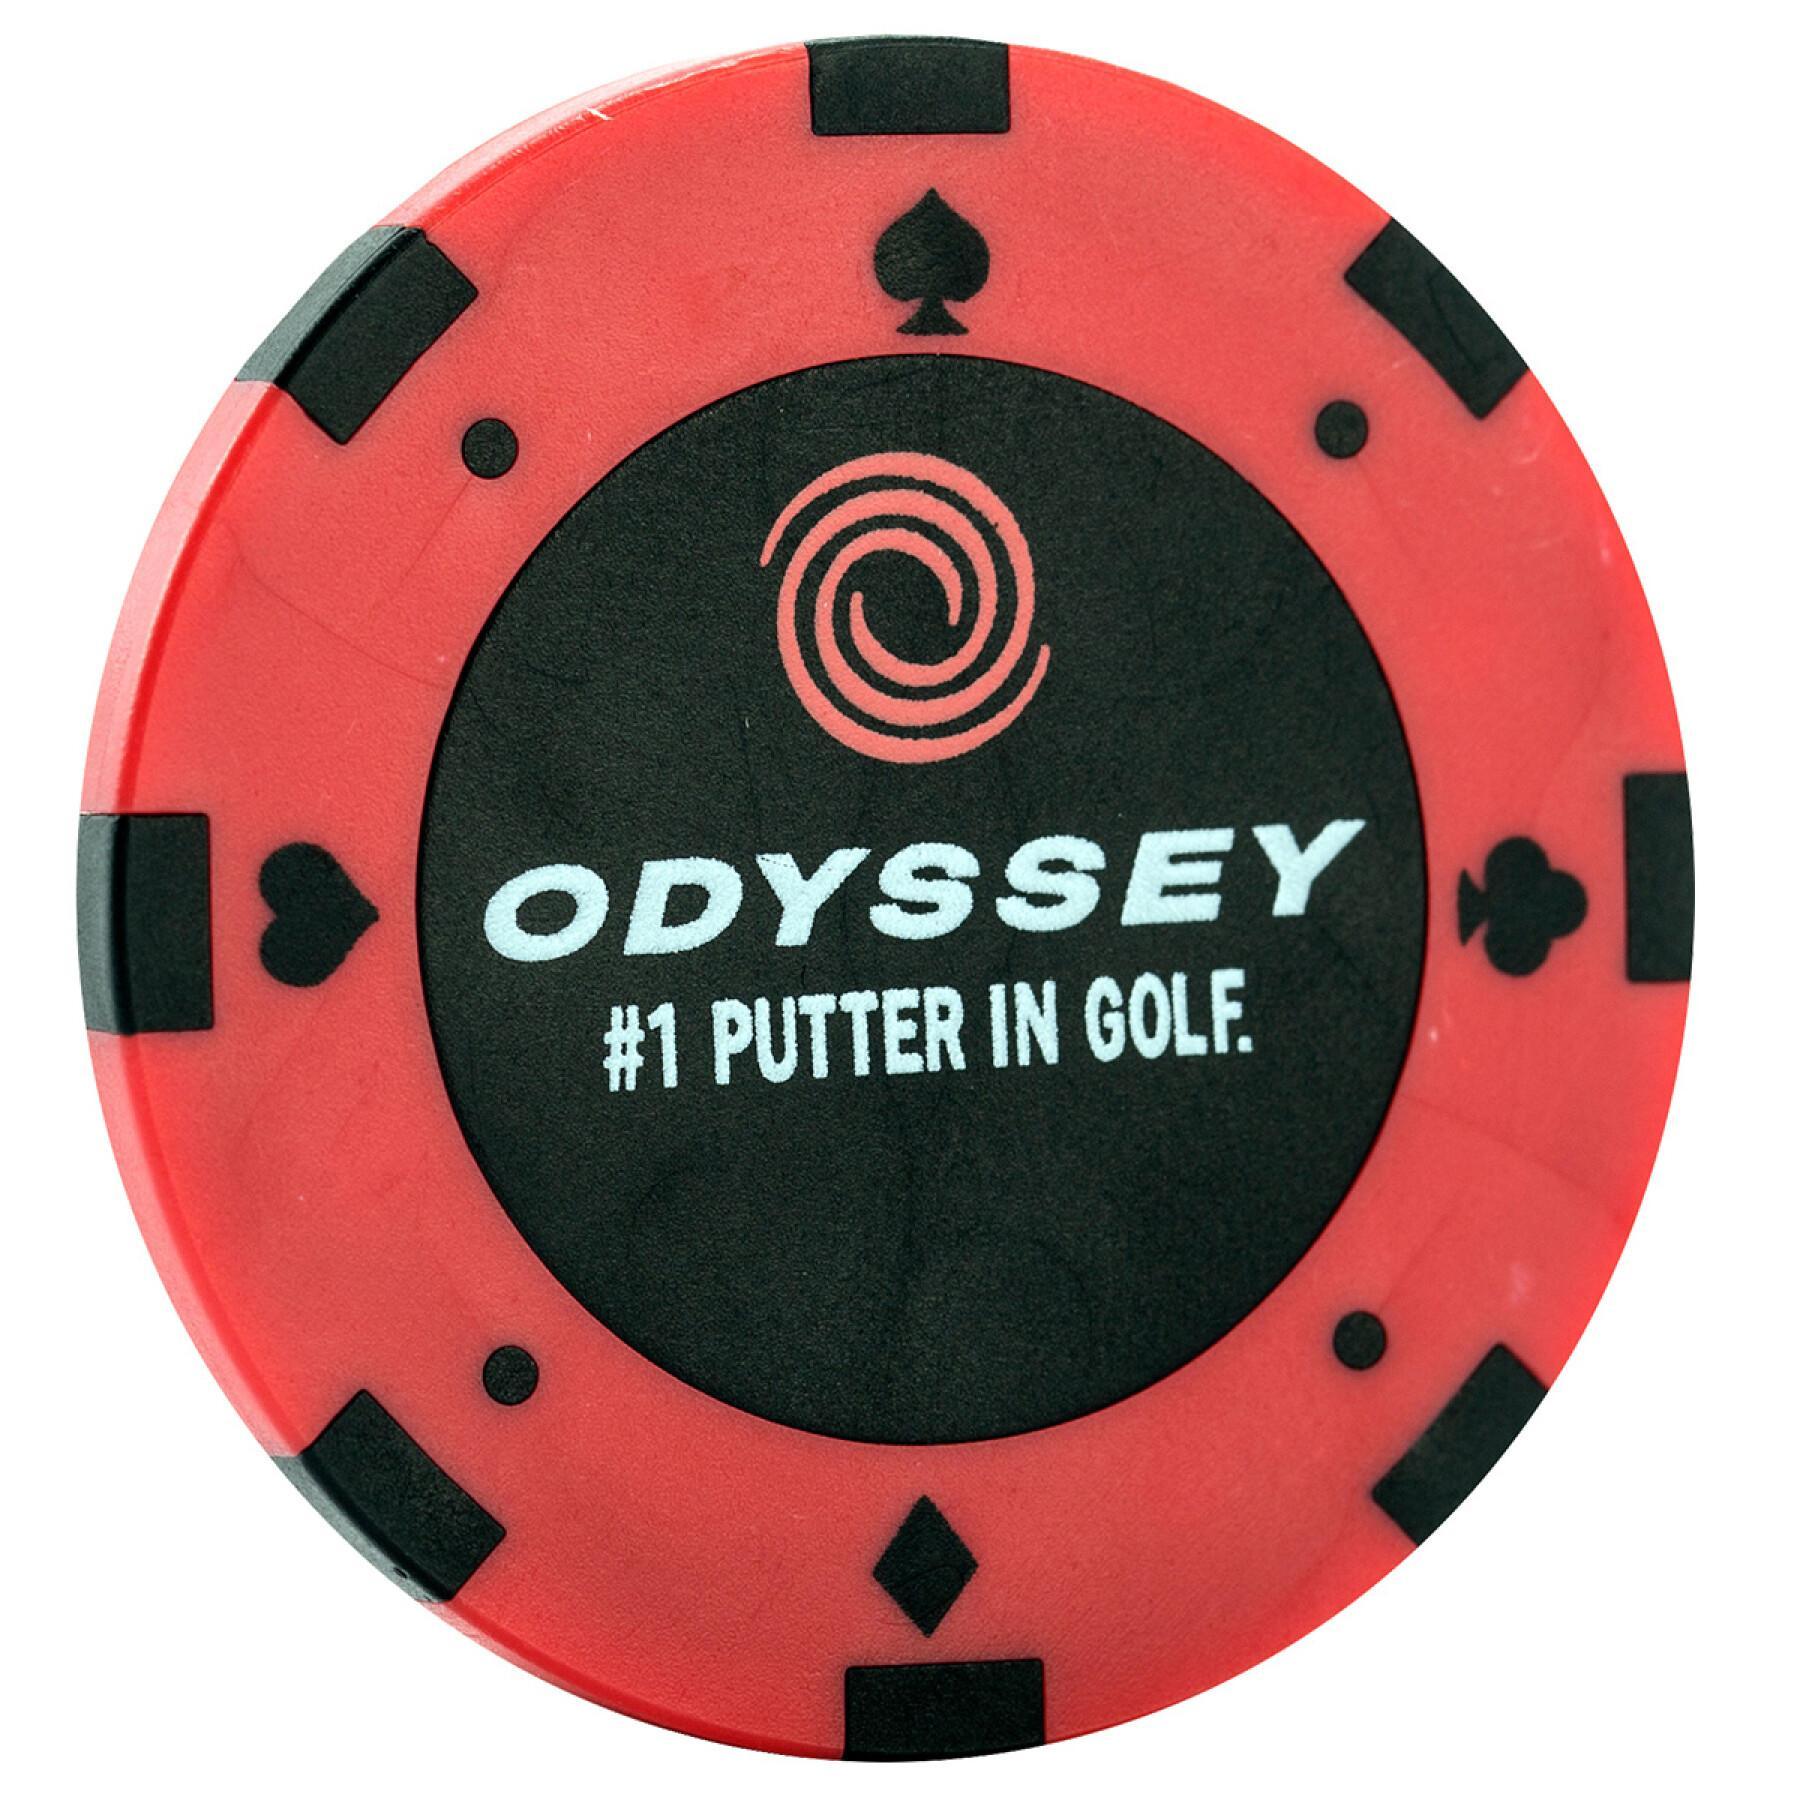 Marcadores de pelotas de golf Callaway odyssey poker chip